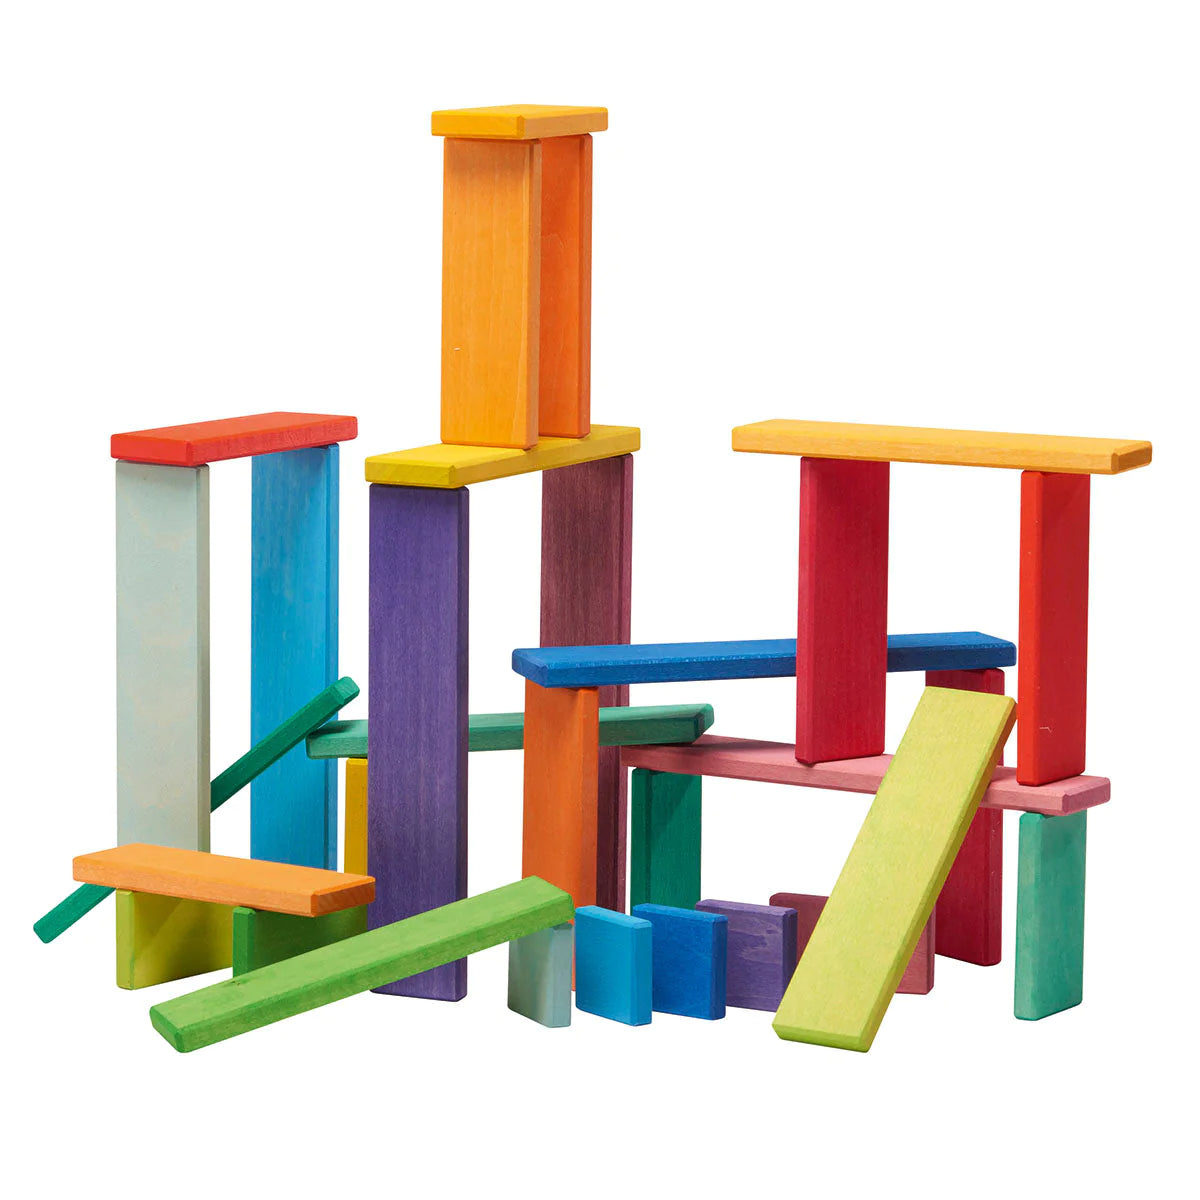 Gluckskafer Wooden Blocks - Rainbow Building Slats in Tray - 32 pieces